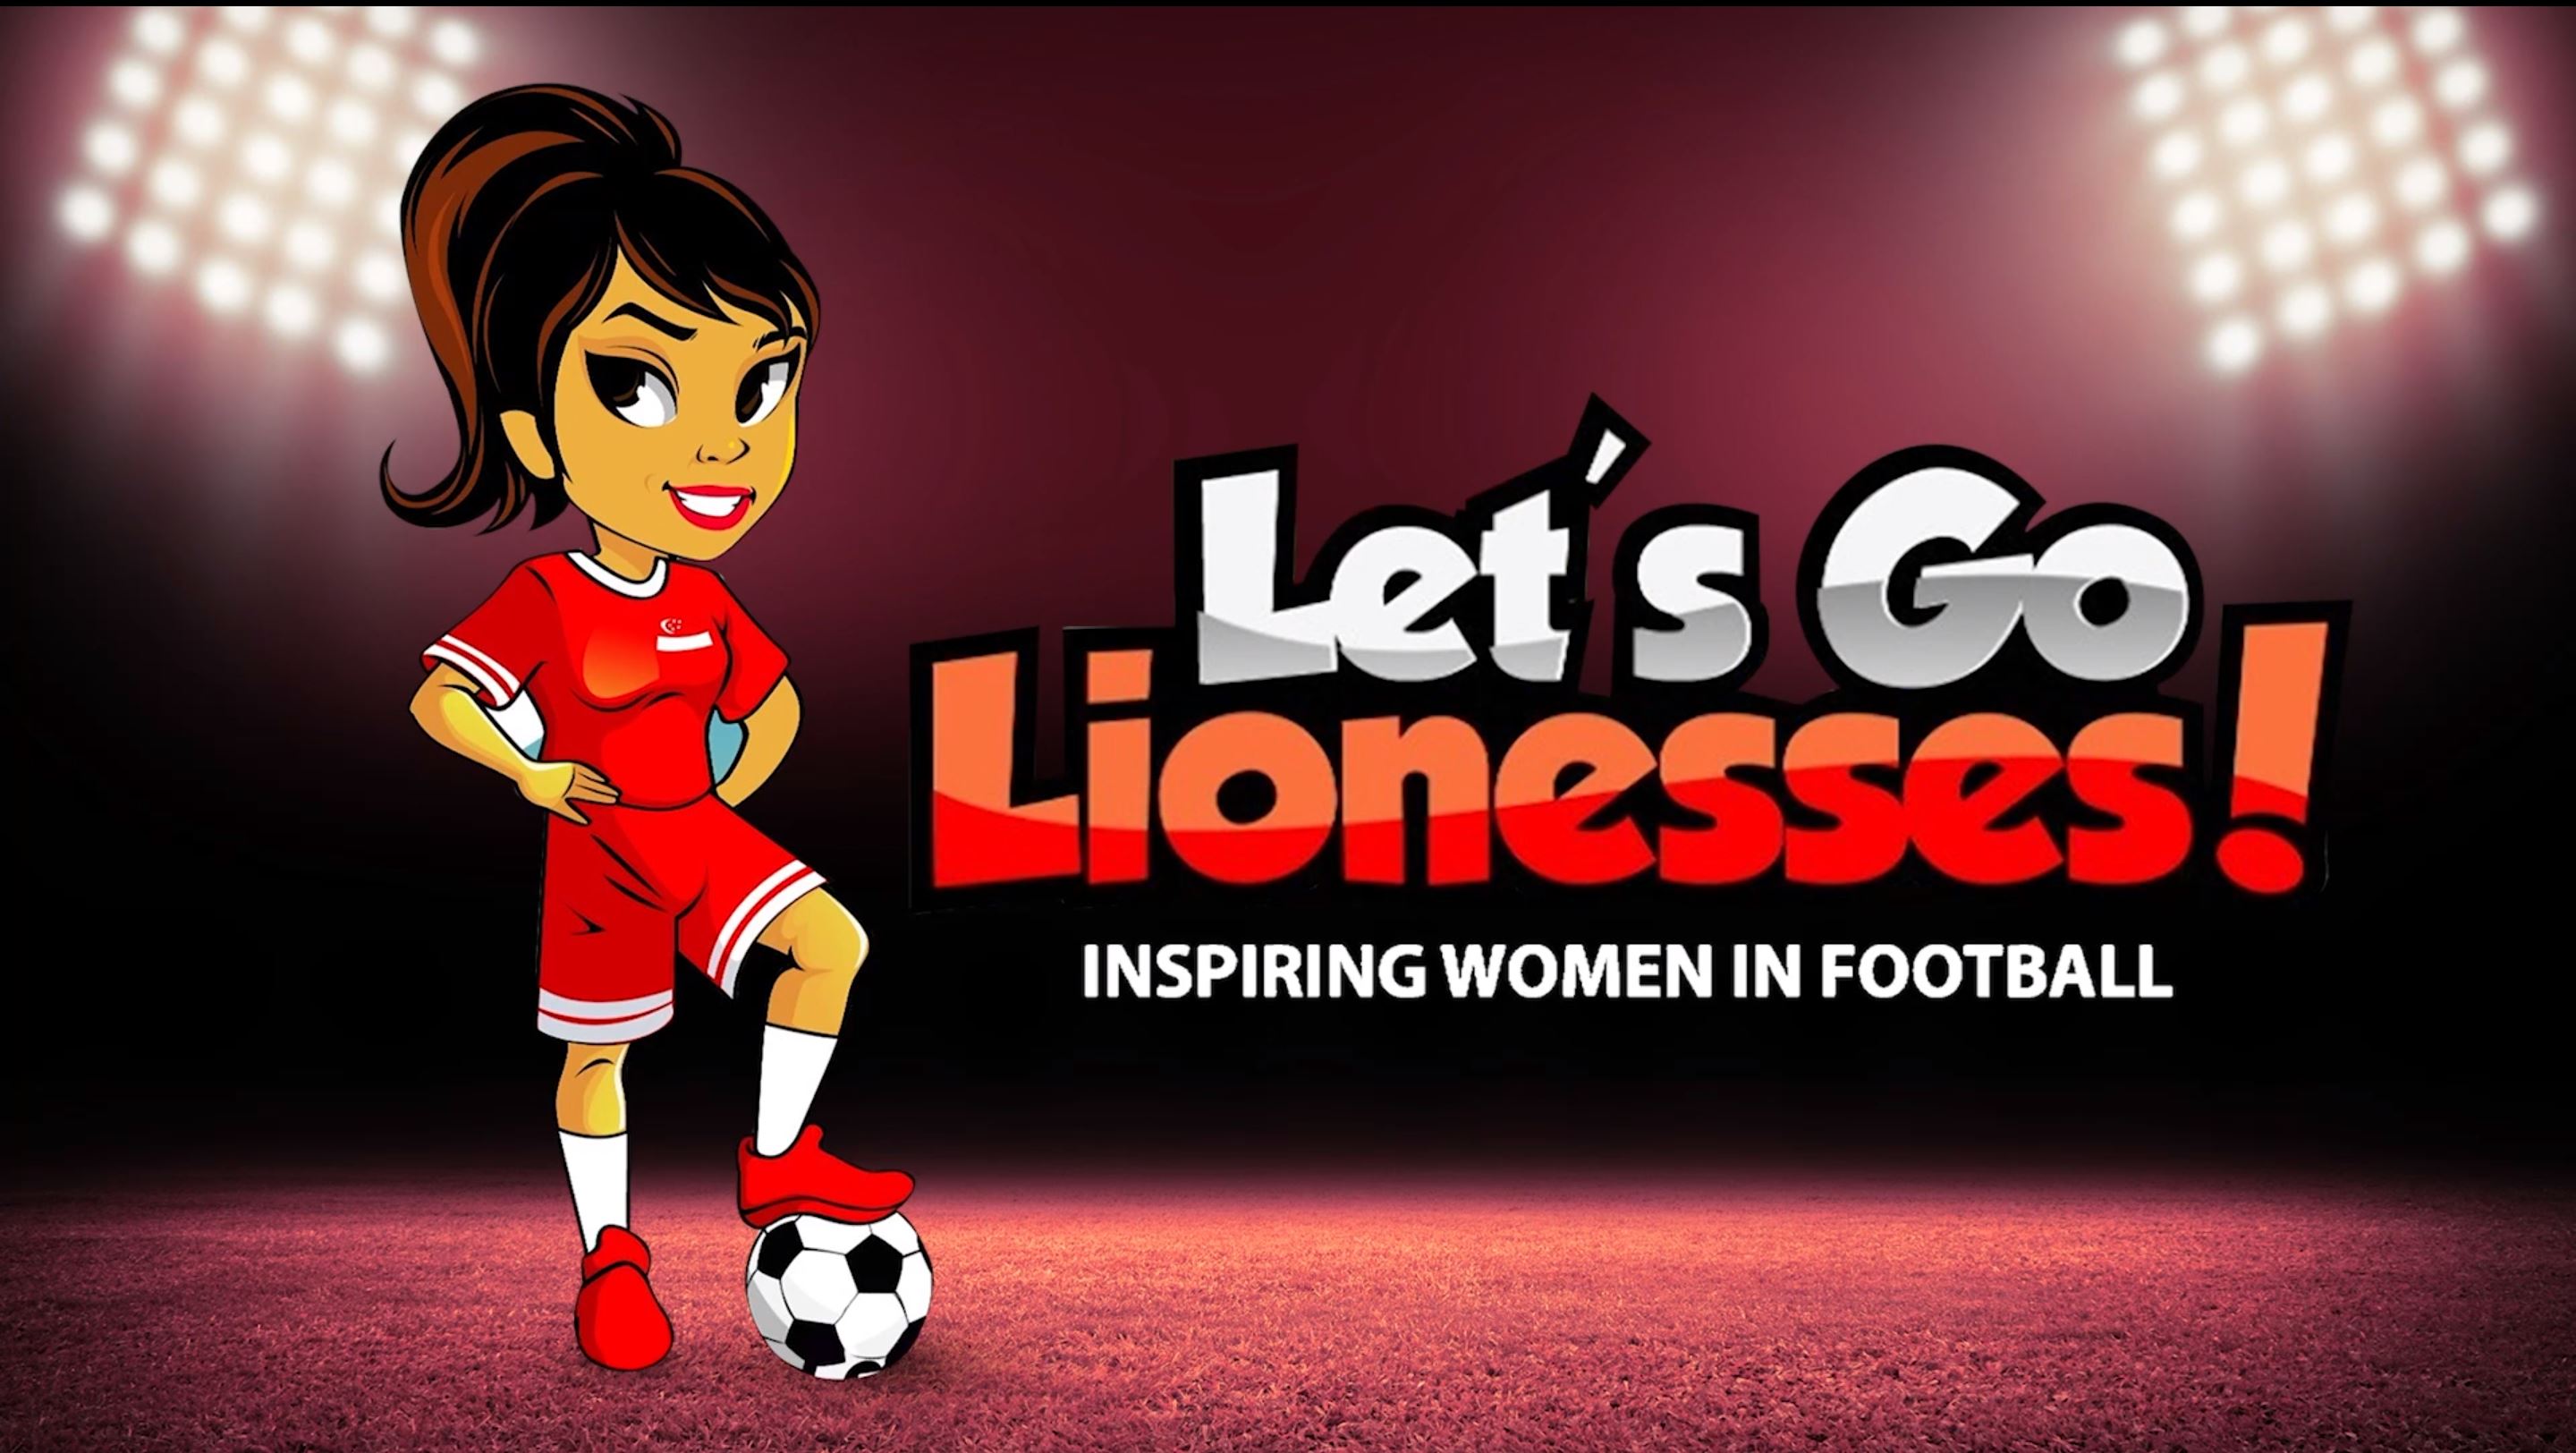 Let's Go Lionesses!